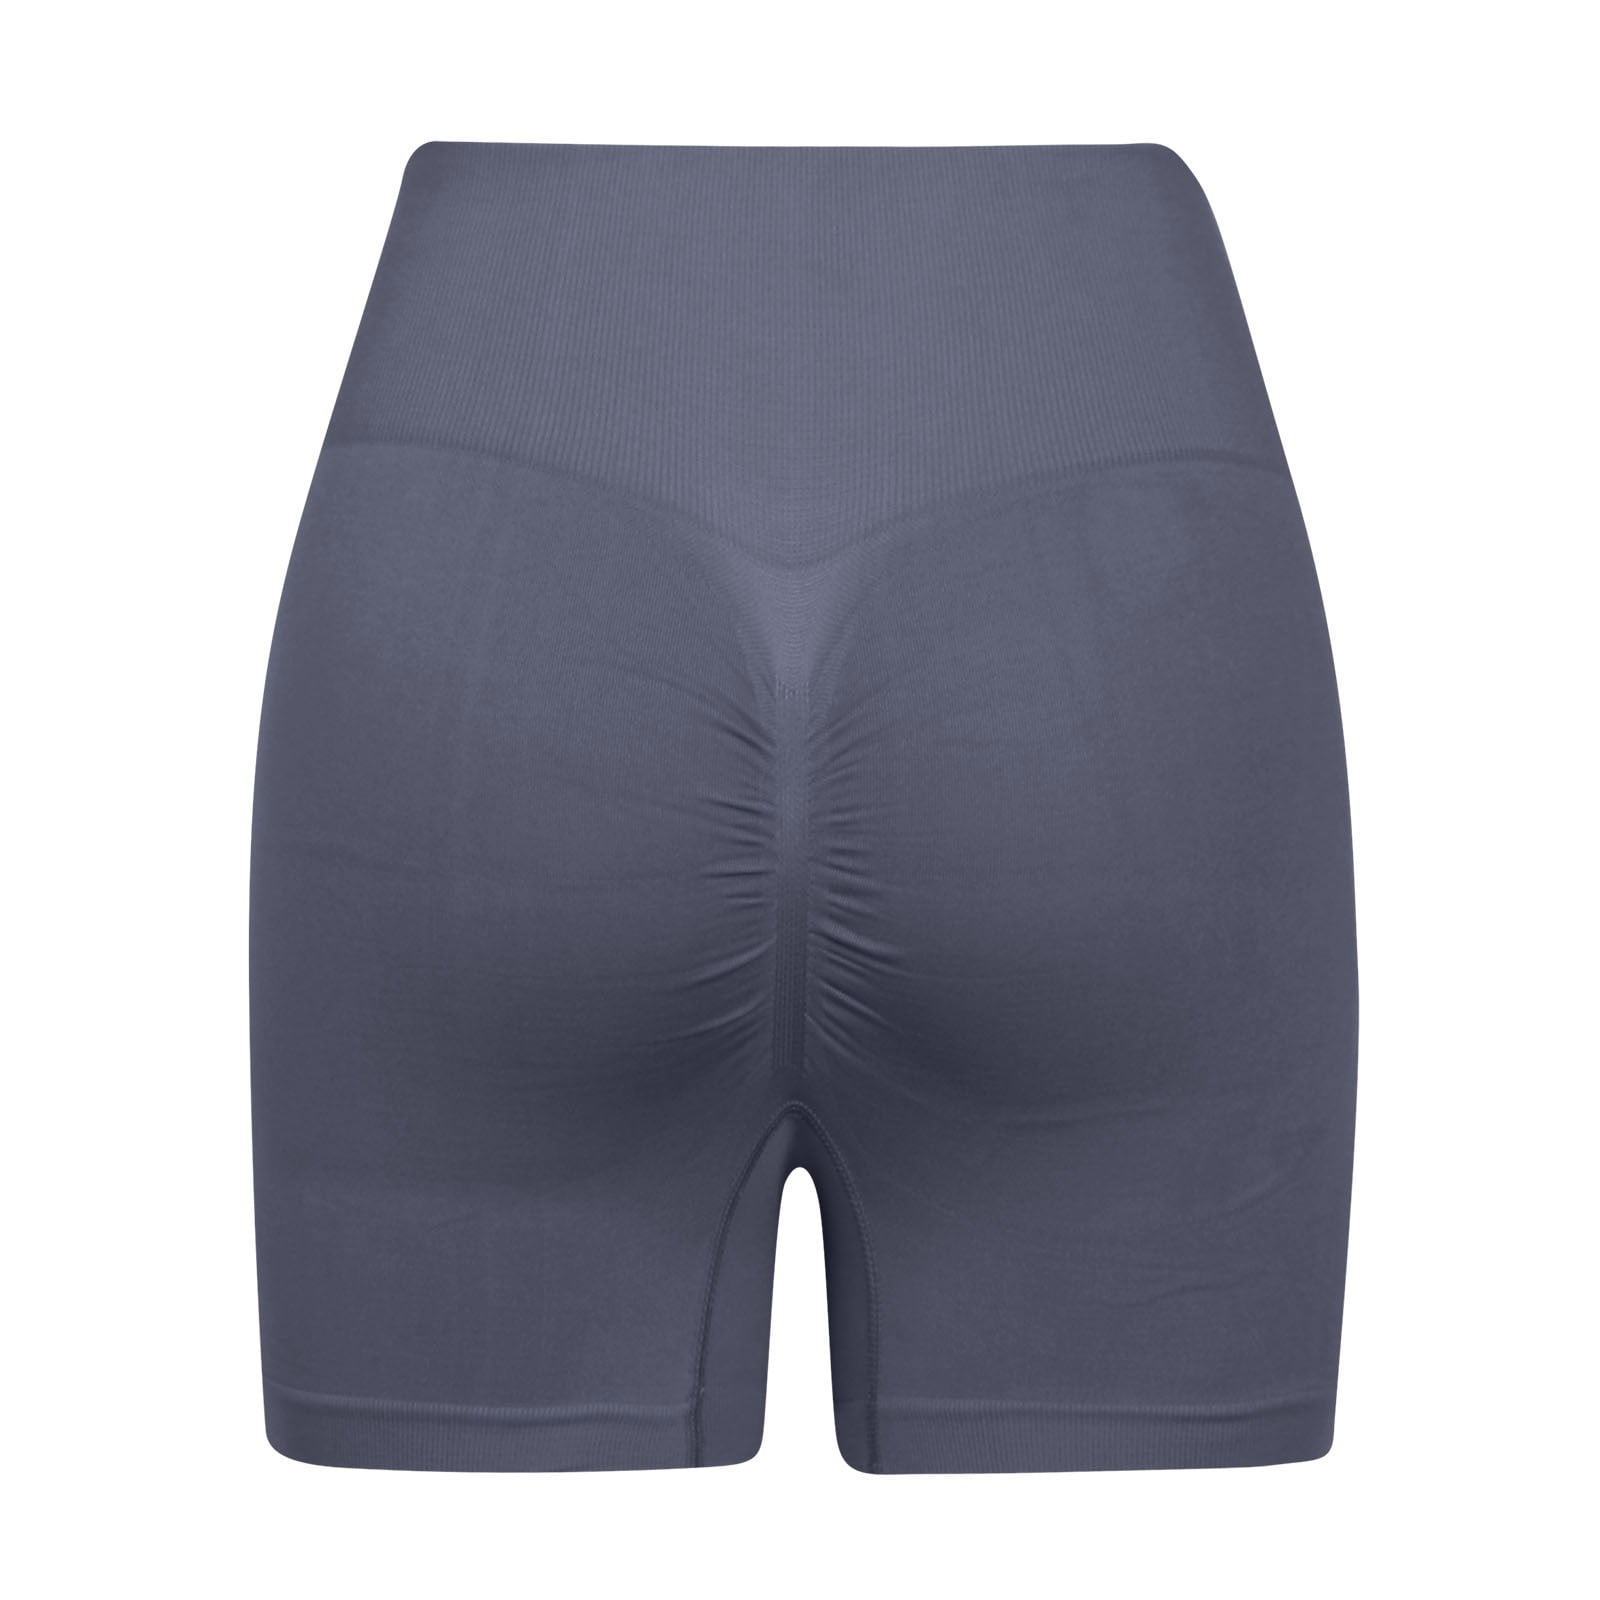 Baocc Yoga Shorts Women's Bubble Cloth Peach Fitness Pants Super Short Yoga  Shorts Shorts for Women Purple 